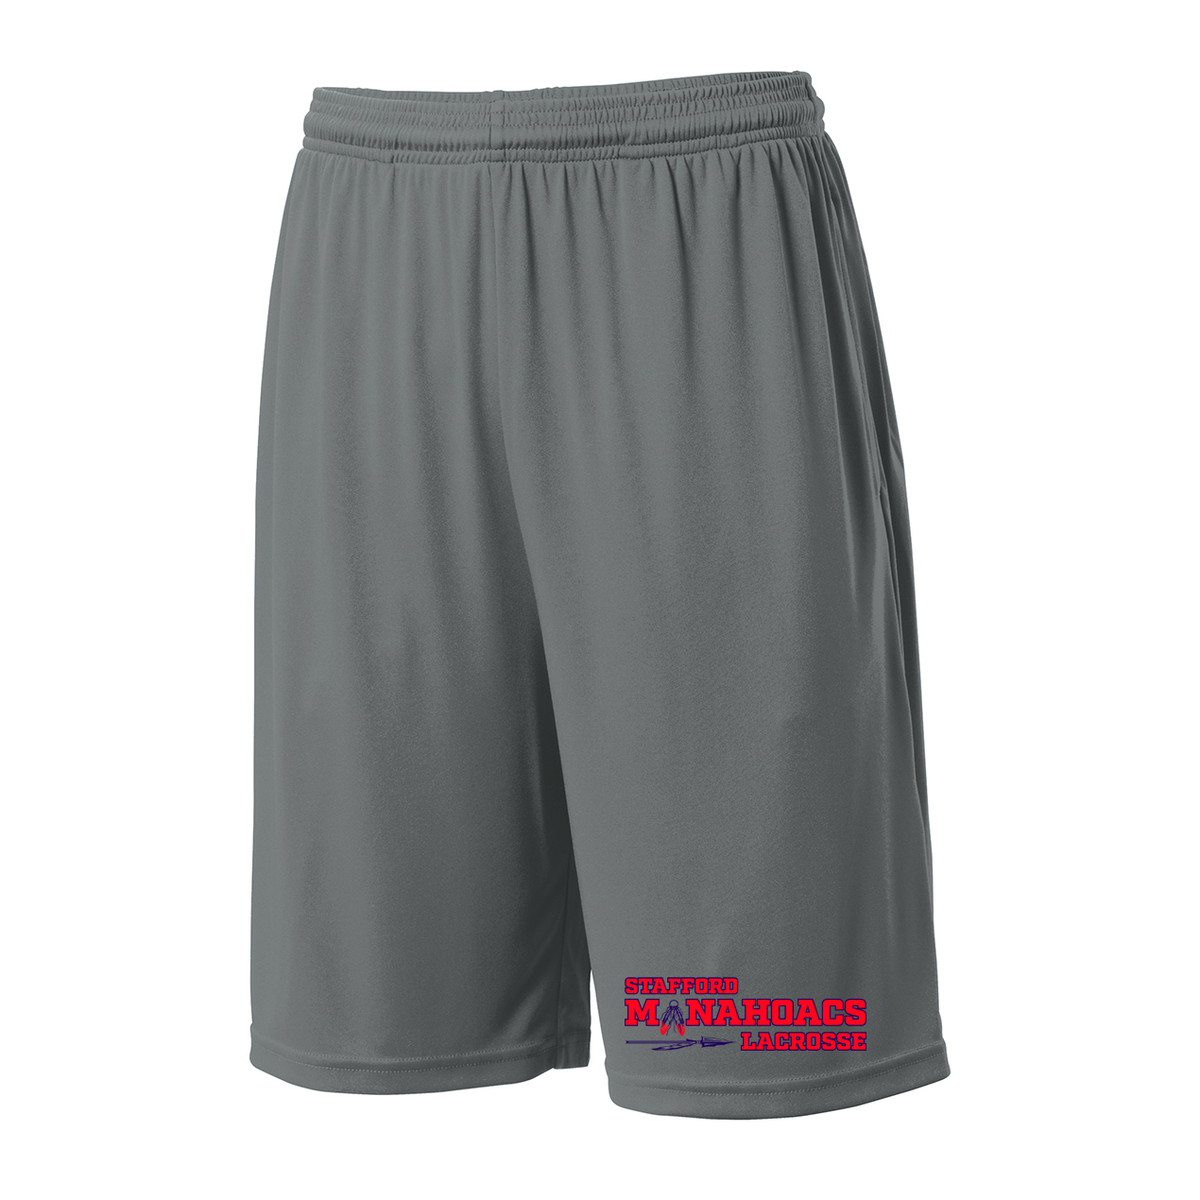 Stafford Lacrosse Shorts